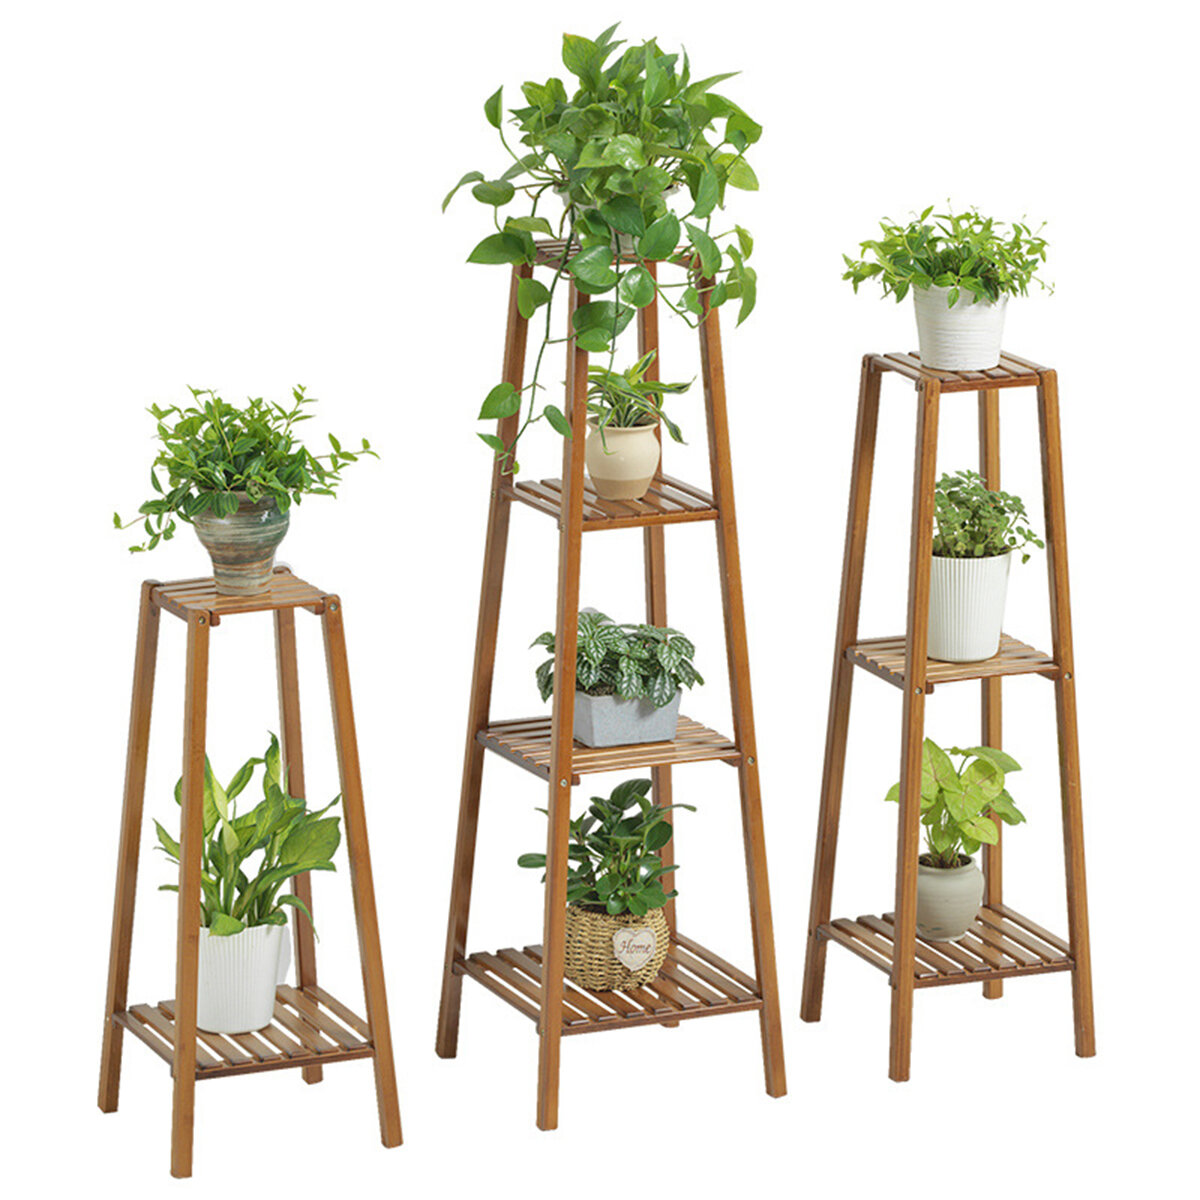 2/3/4 Tier Flower Pot Stand Wooden Indoor Plant Garden Planter Shelf